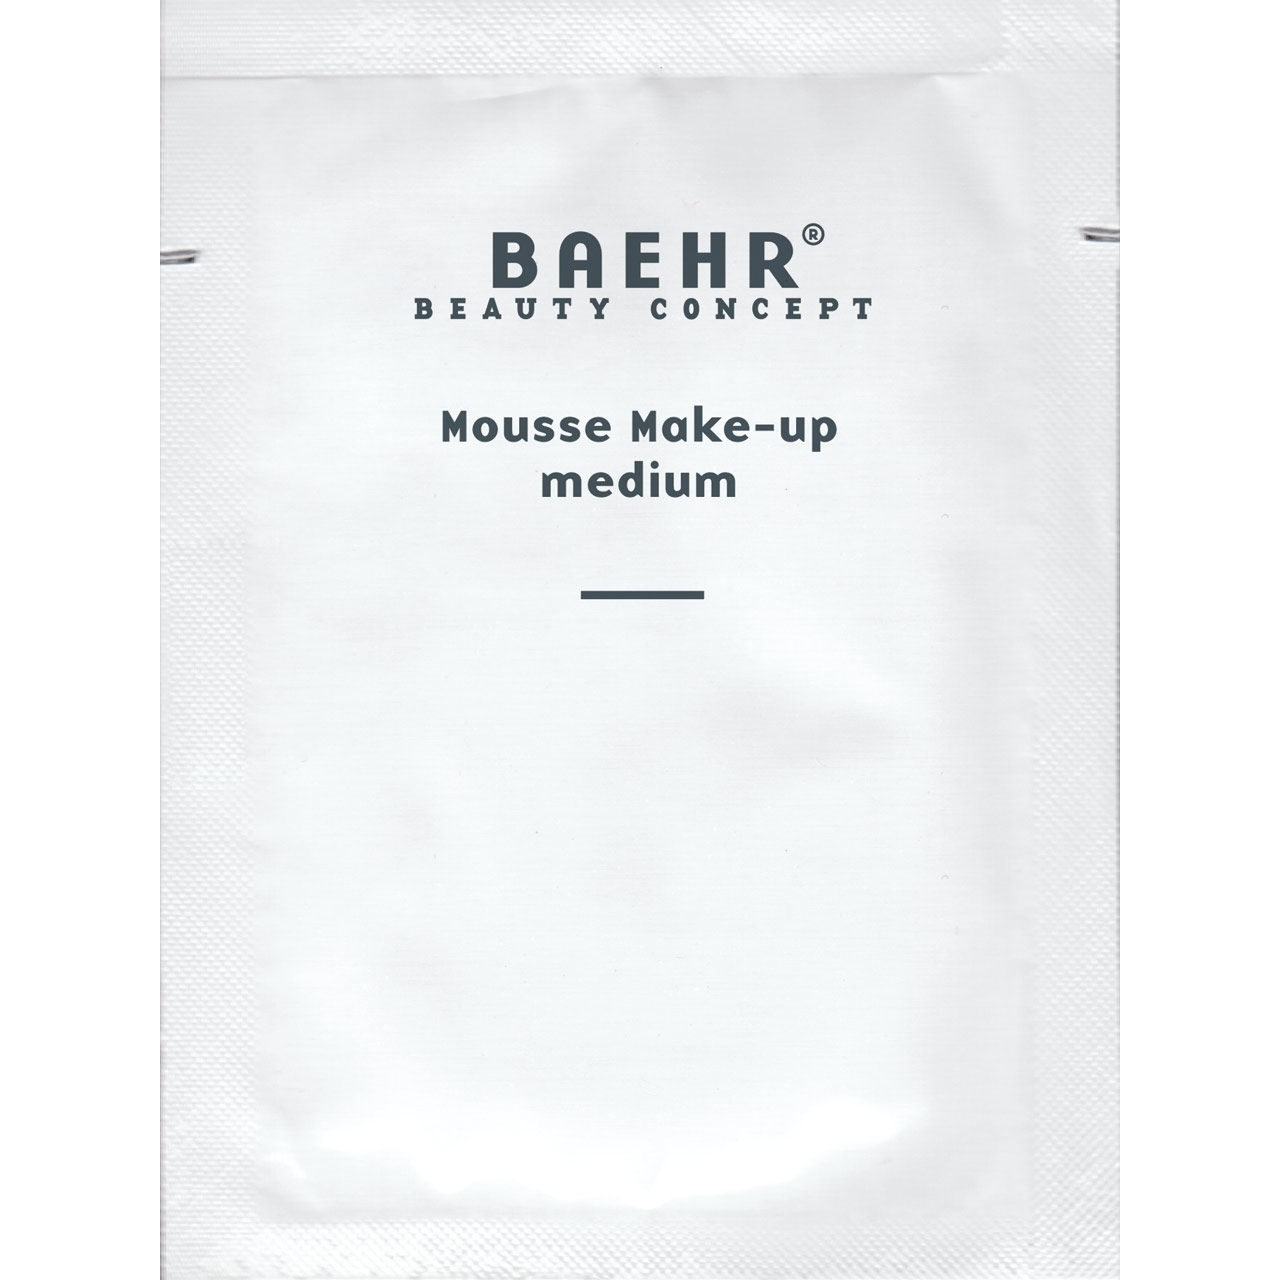 BAEHR BEAUTY CONCEPT - Mousse Make-up medium, Sachet 2 ml